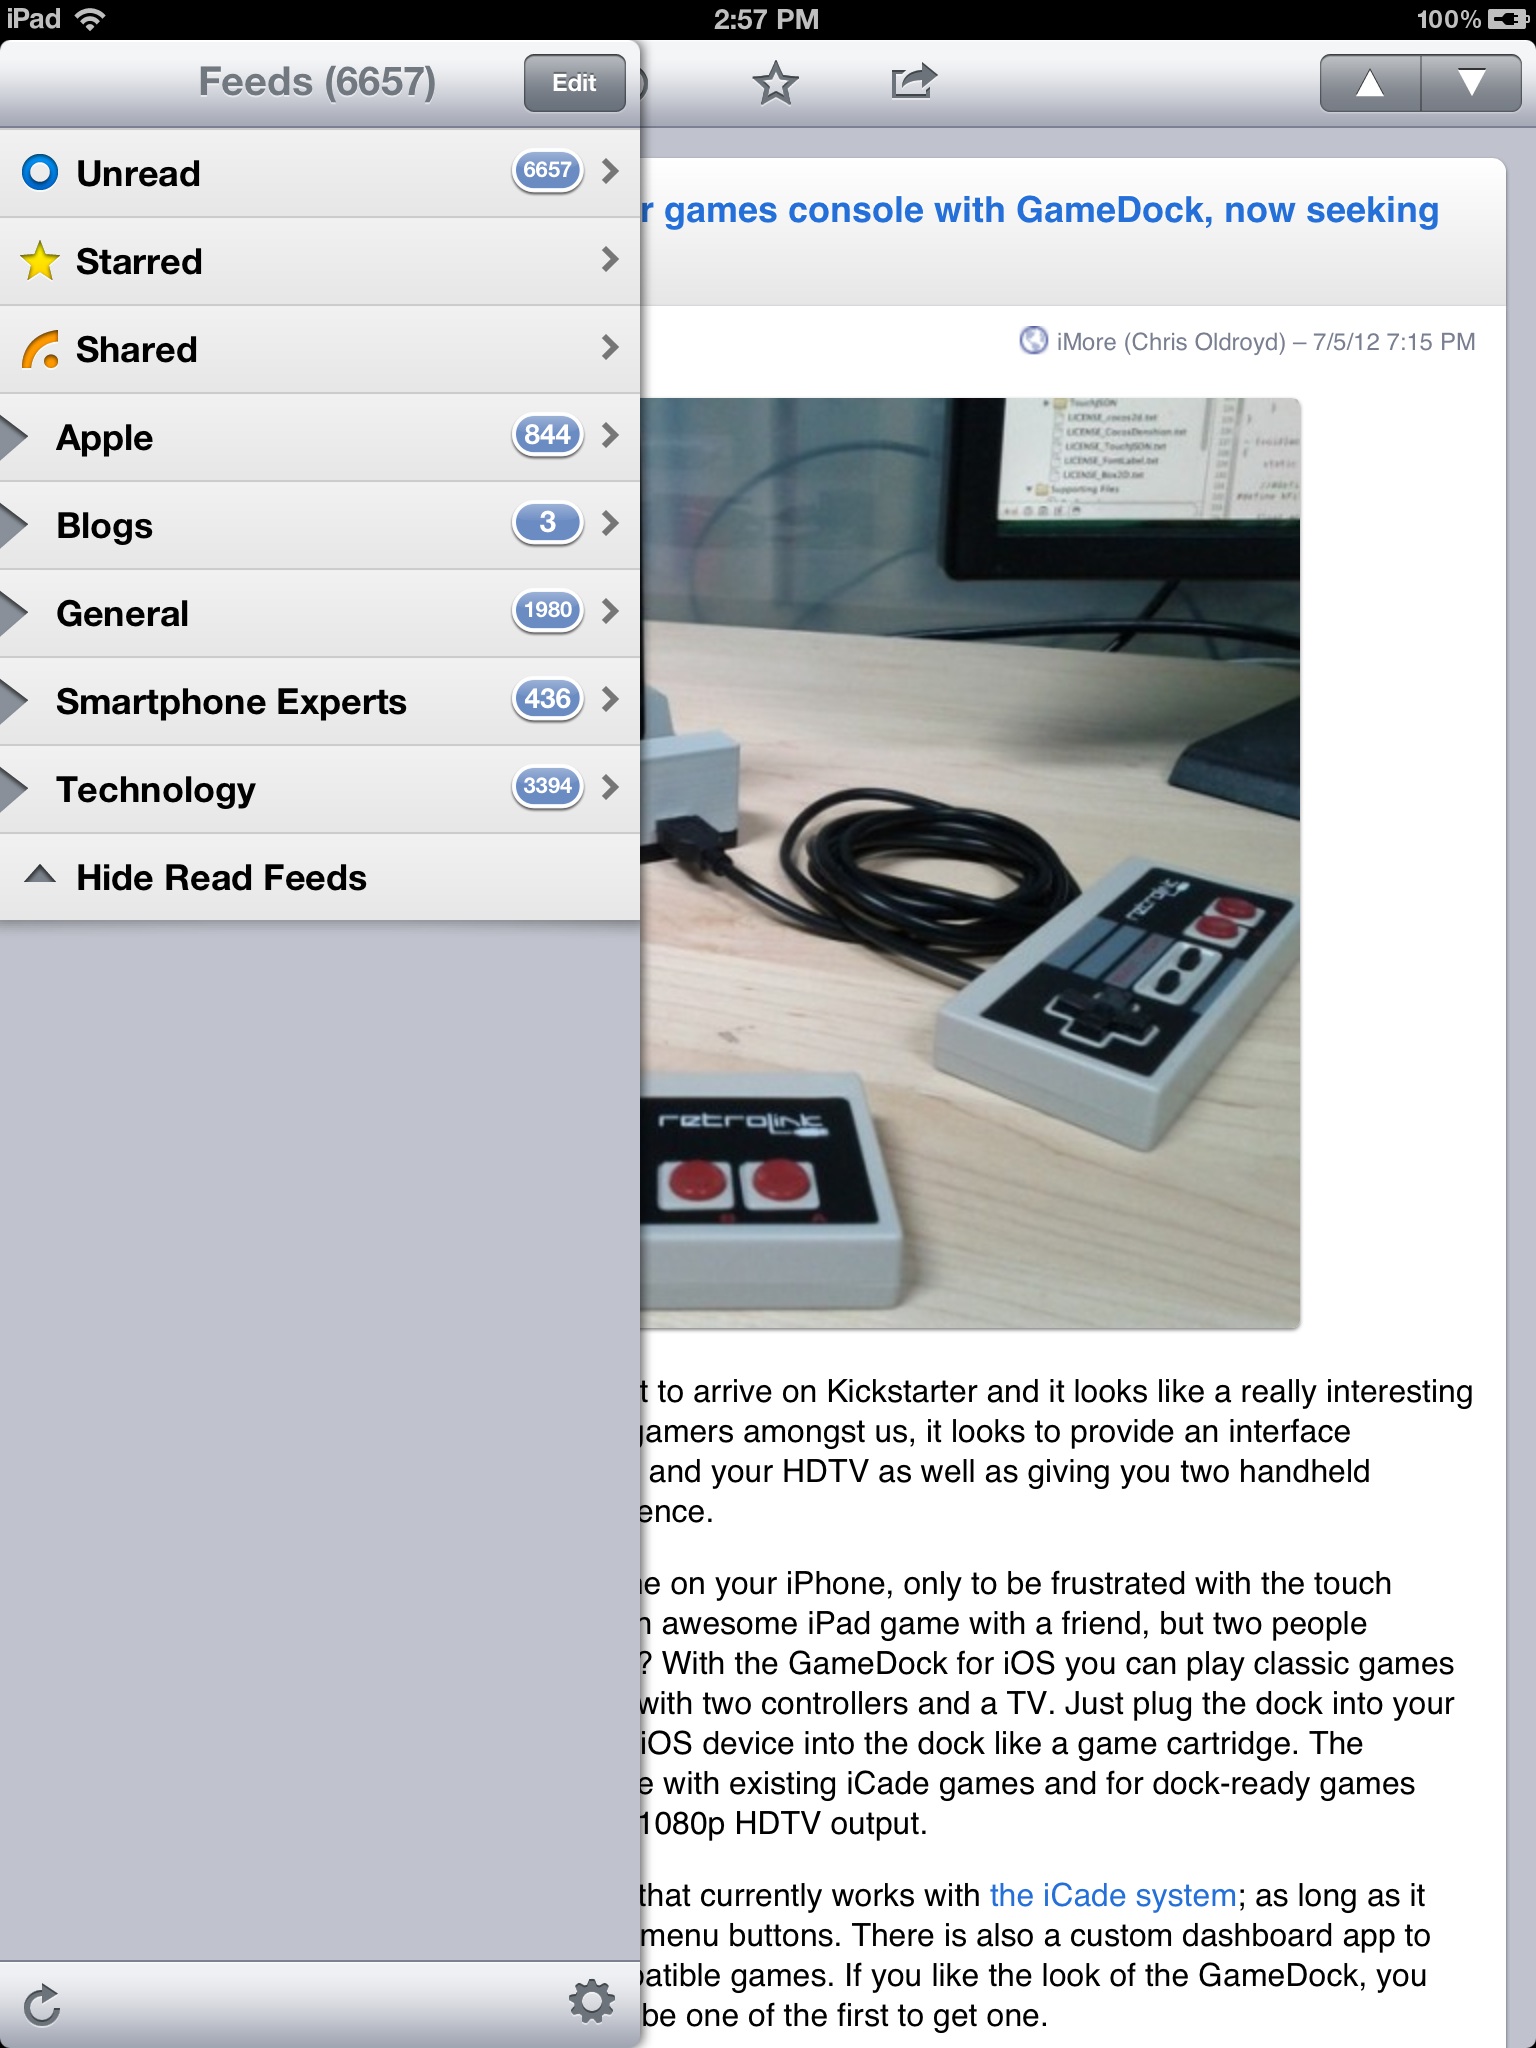 NewsRack for iPad user interface 2